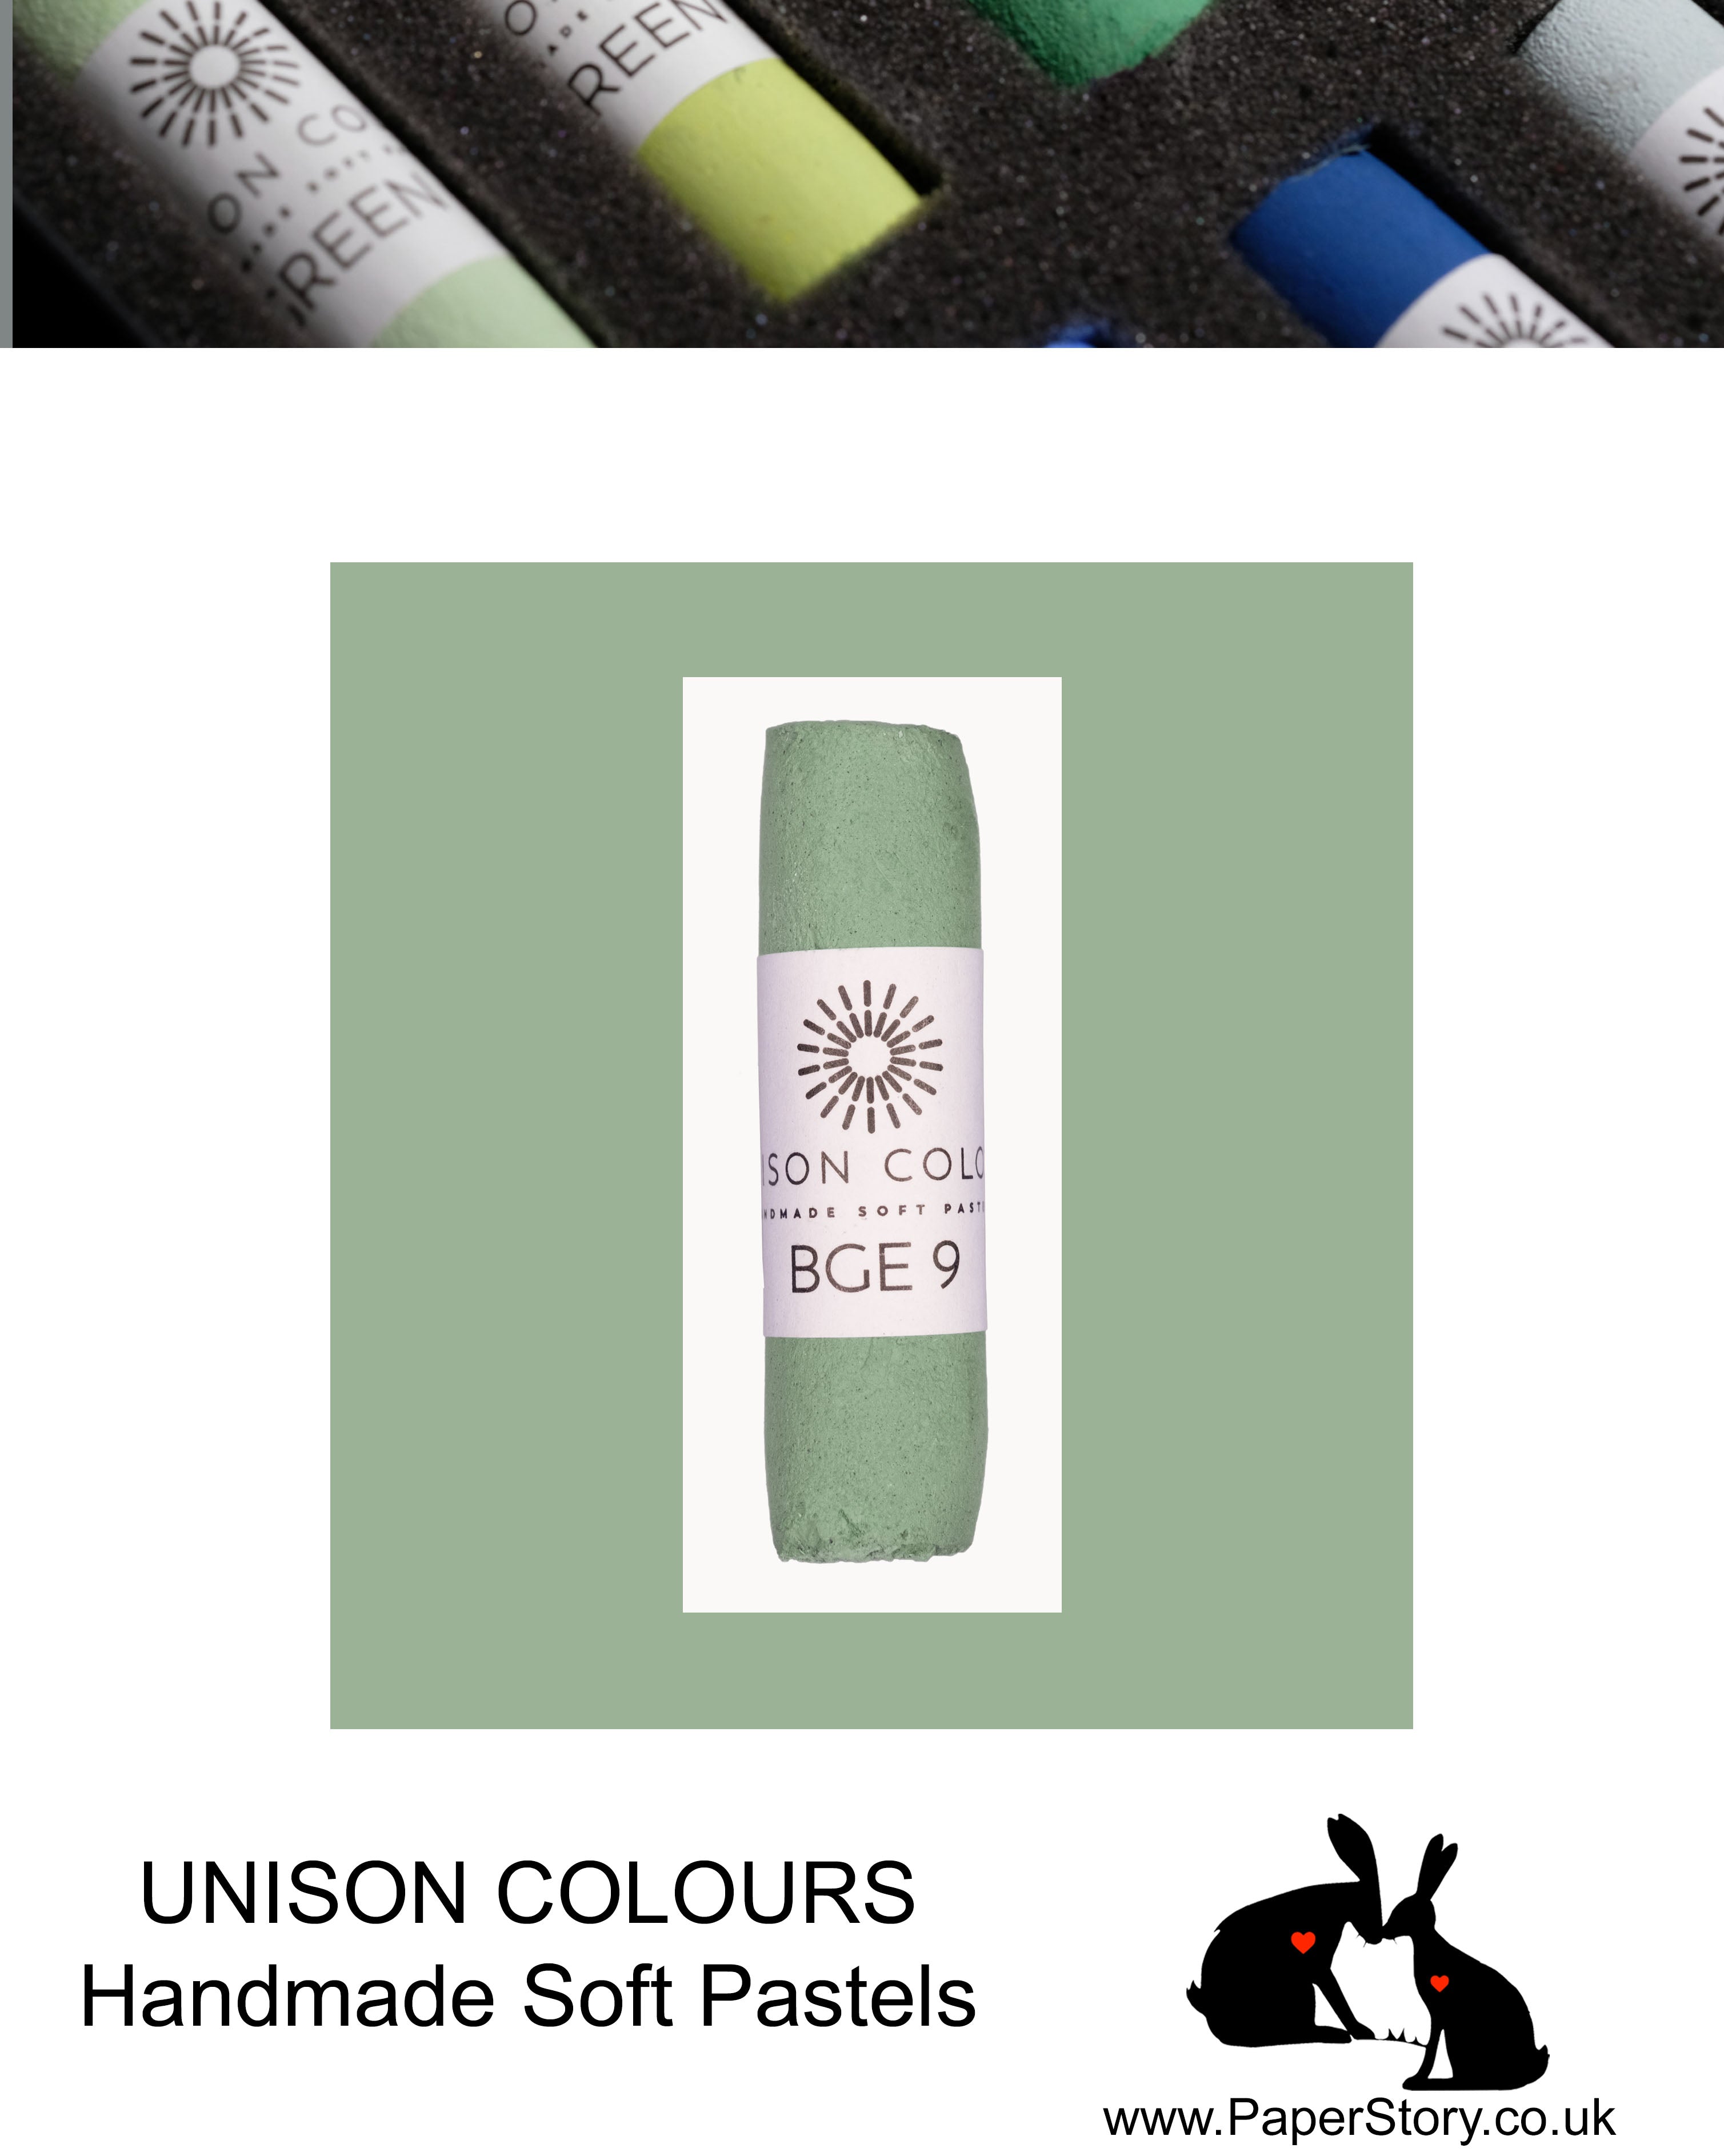 Unison Colour Handmade Soft Pastels Blue Green Earth 09 - Size Regular